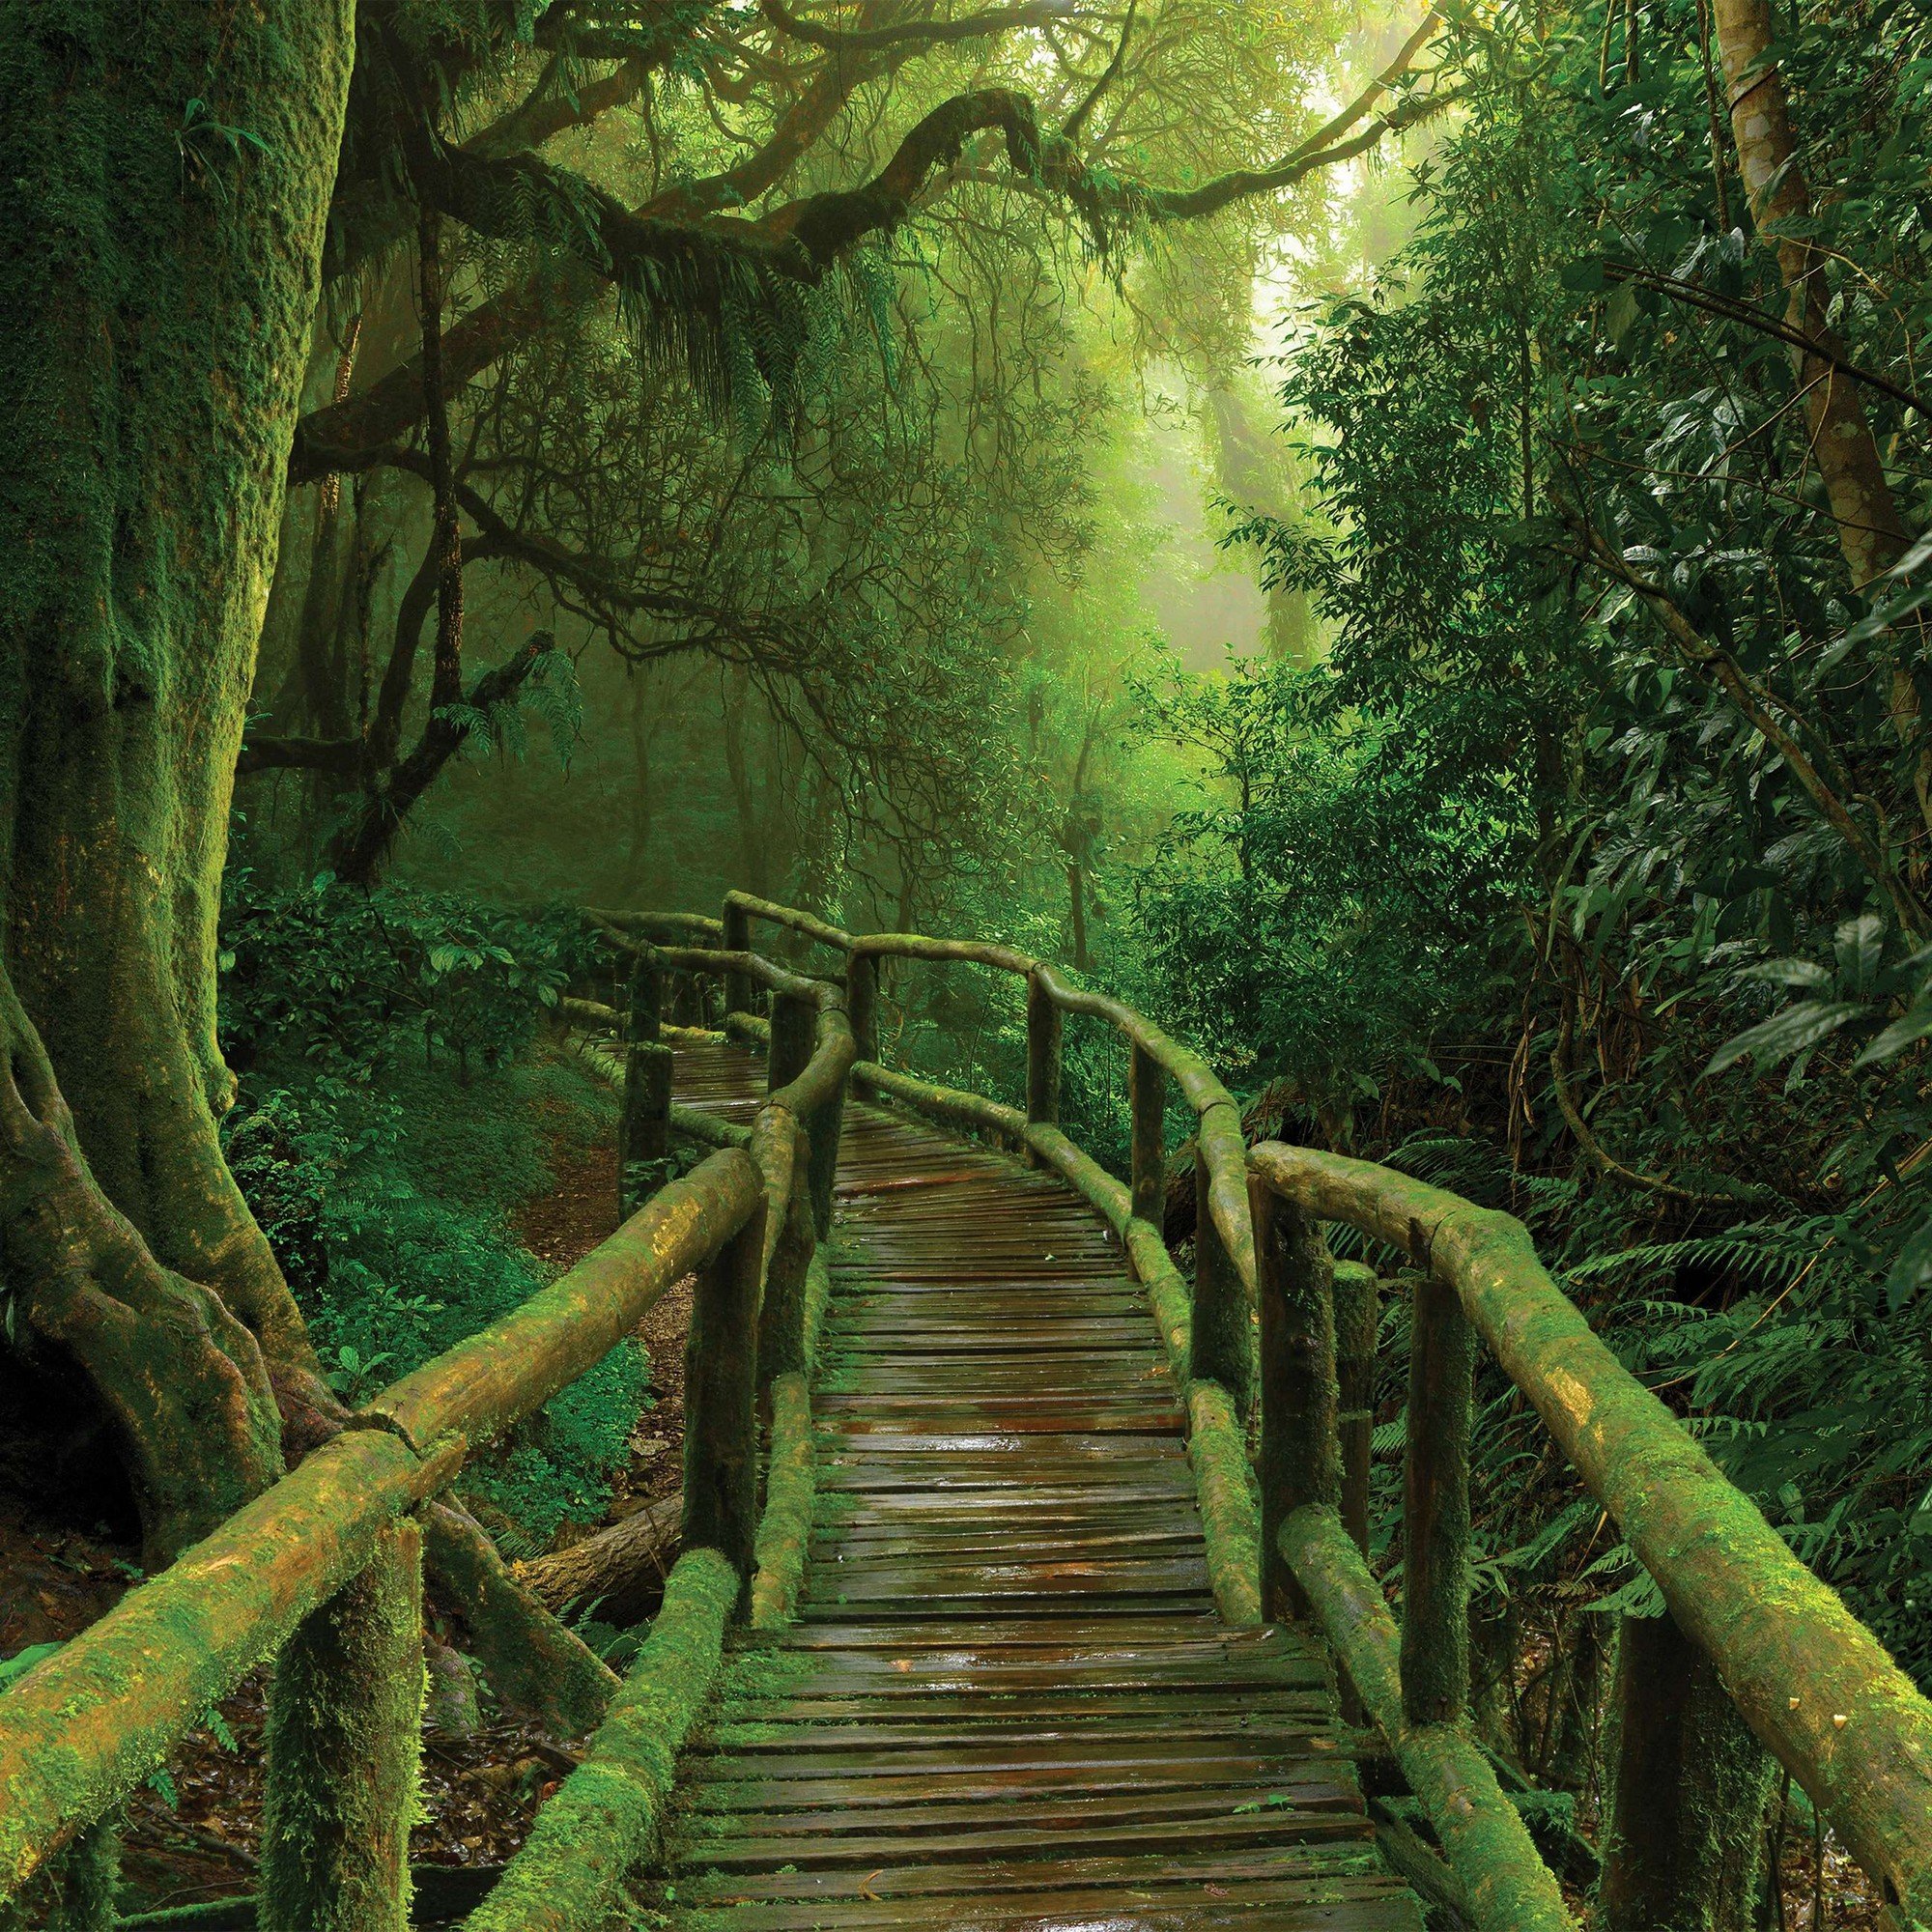 Vlies foto tapeta: Pješački most u džungli - 368x254 cm